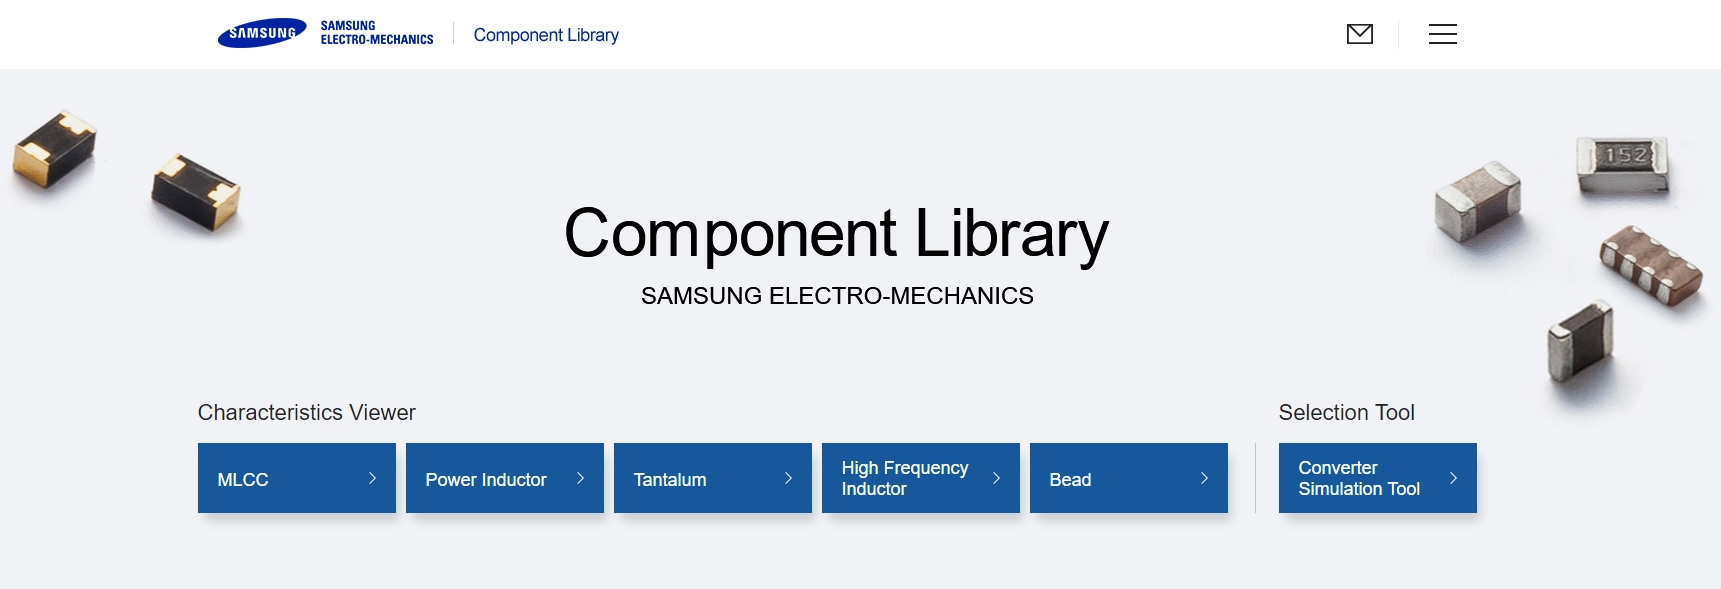 Samsung Electro-Mechanics Component Library 메인 페이지